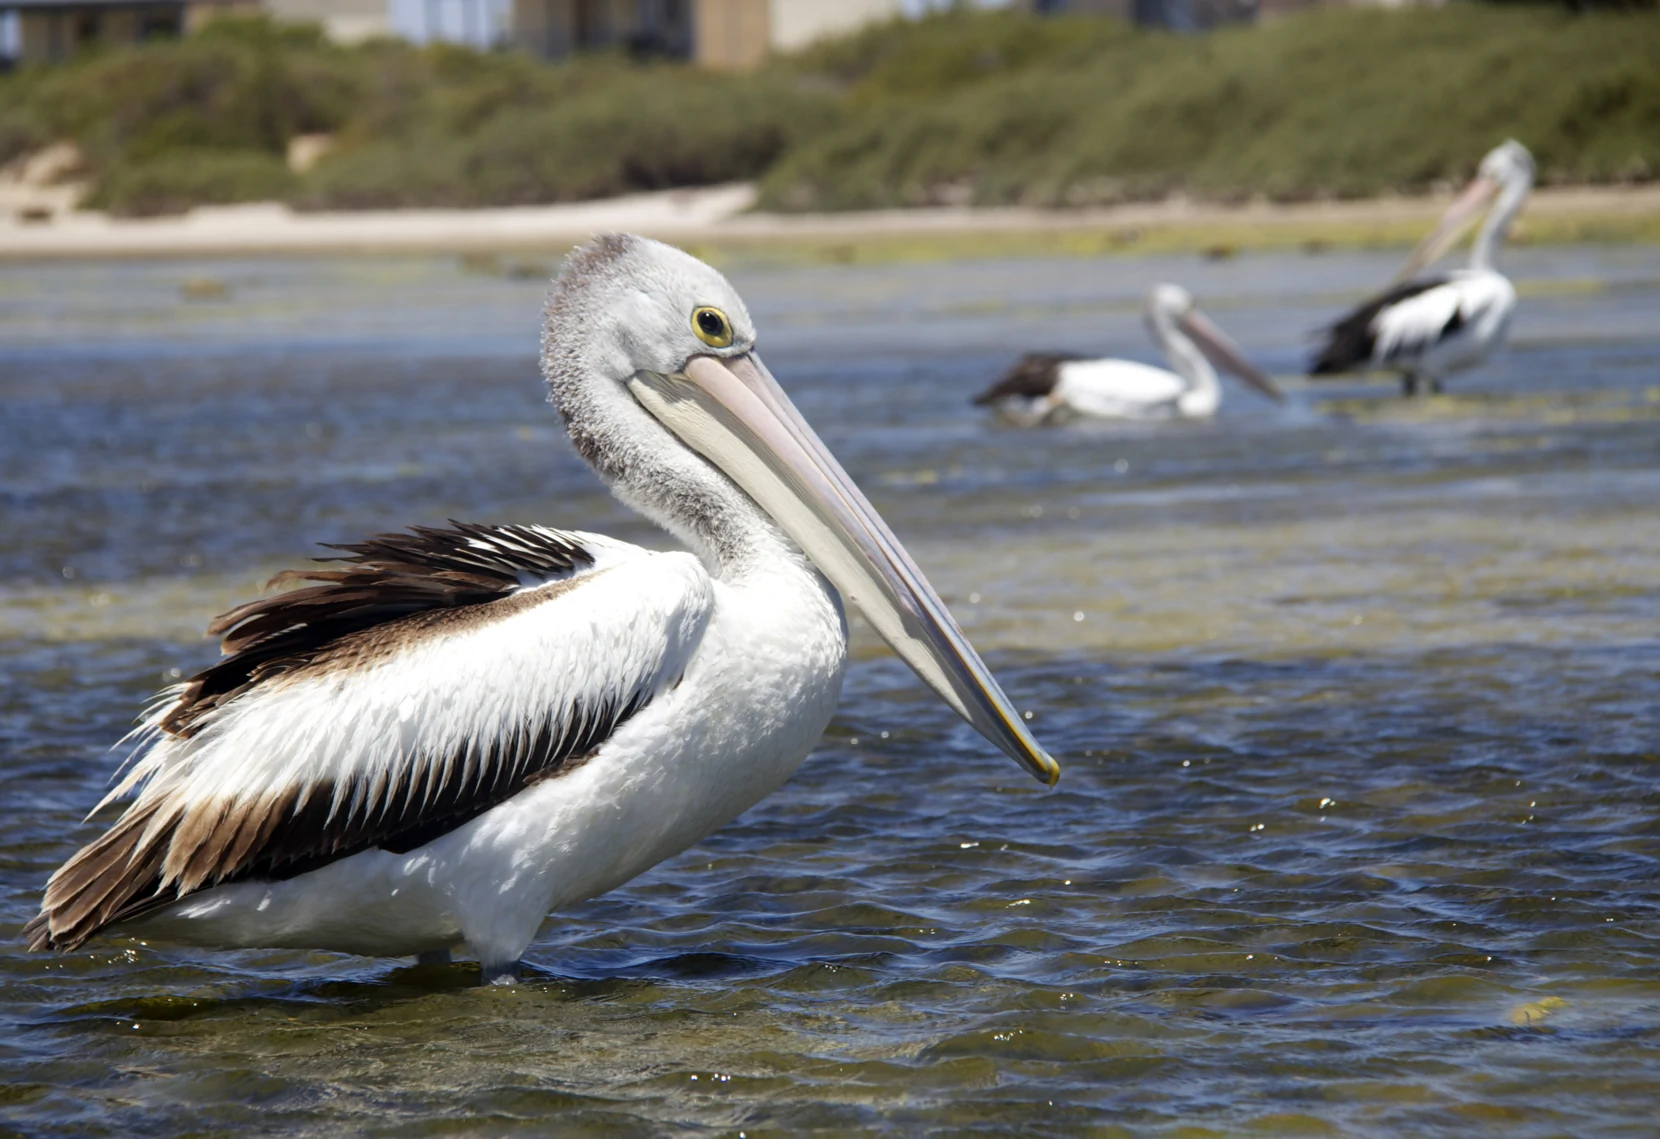 Big pelican, resting standing in shallow water.